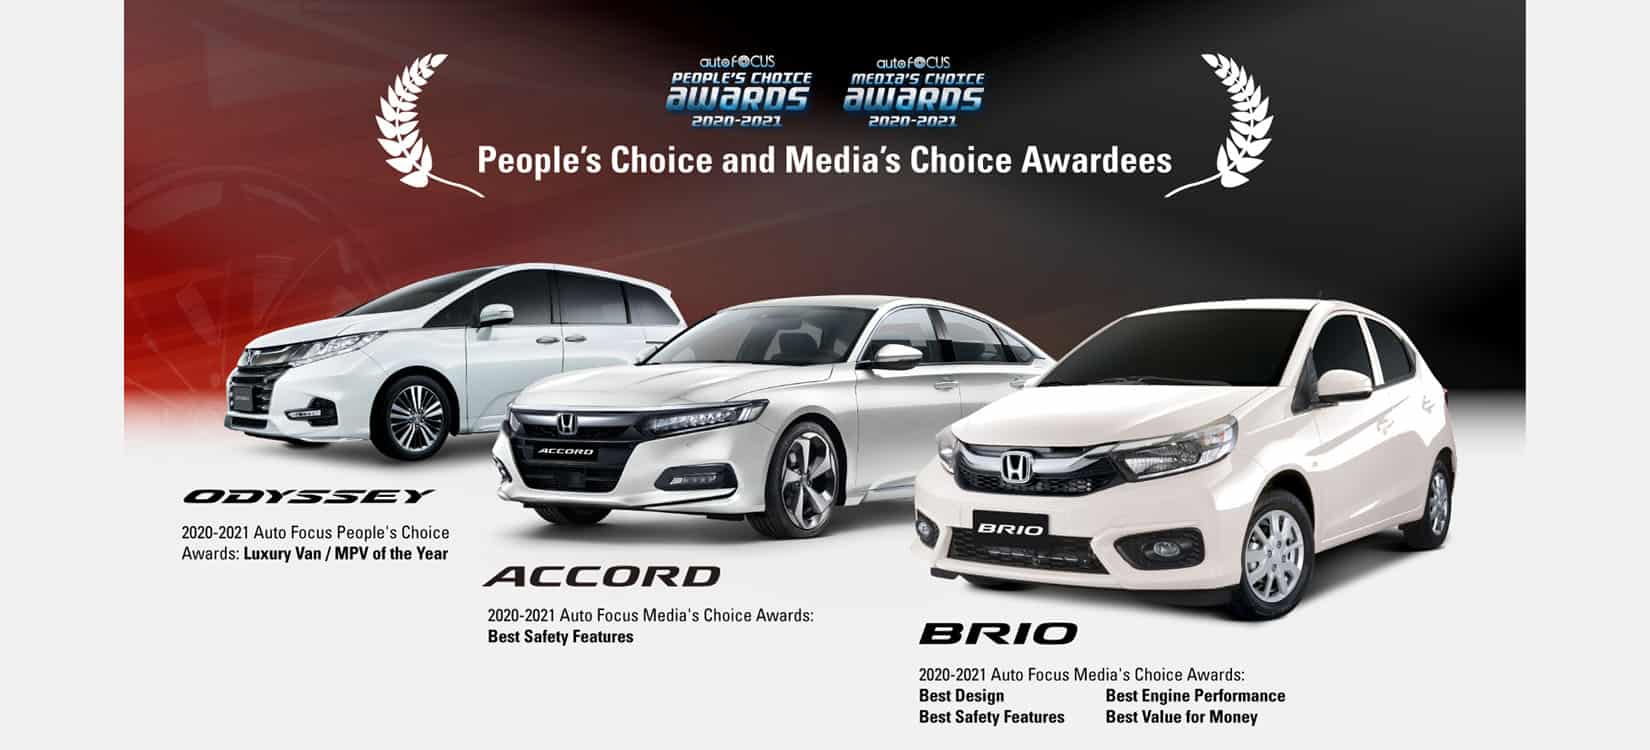 Honda wins six awards from the 2020-2021 Auto Focus People’s & Media’s Choice Awards